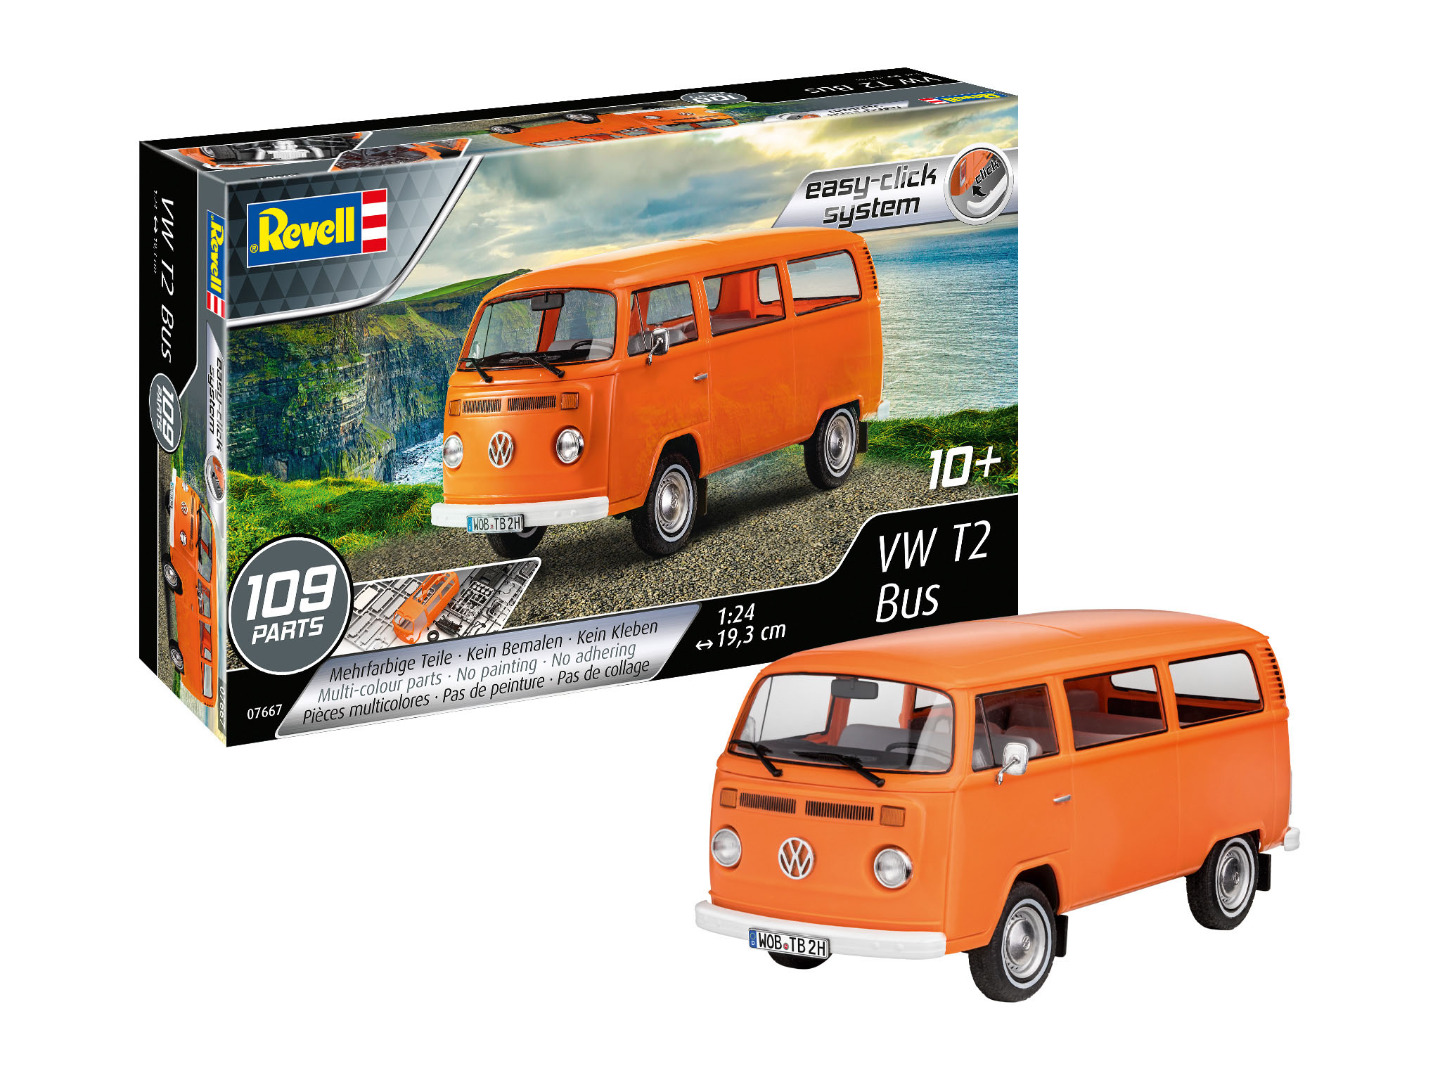 Revell Model Kit VW T2 Bus Easy-Click System Scale 1:24